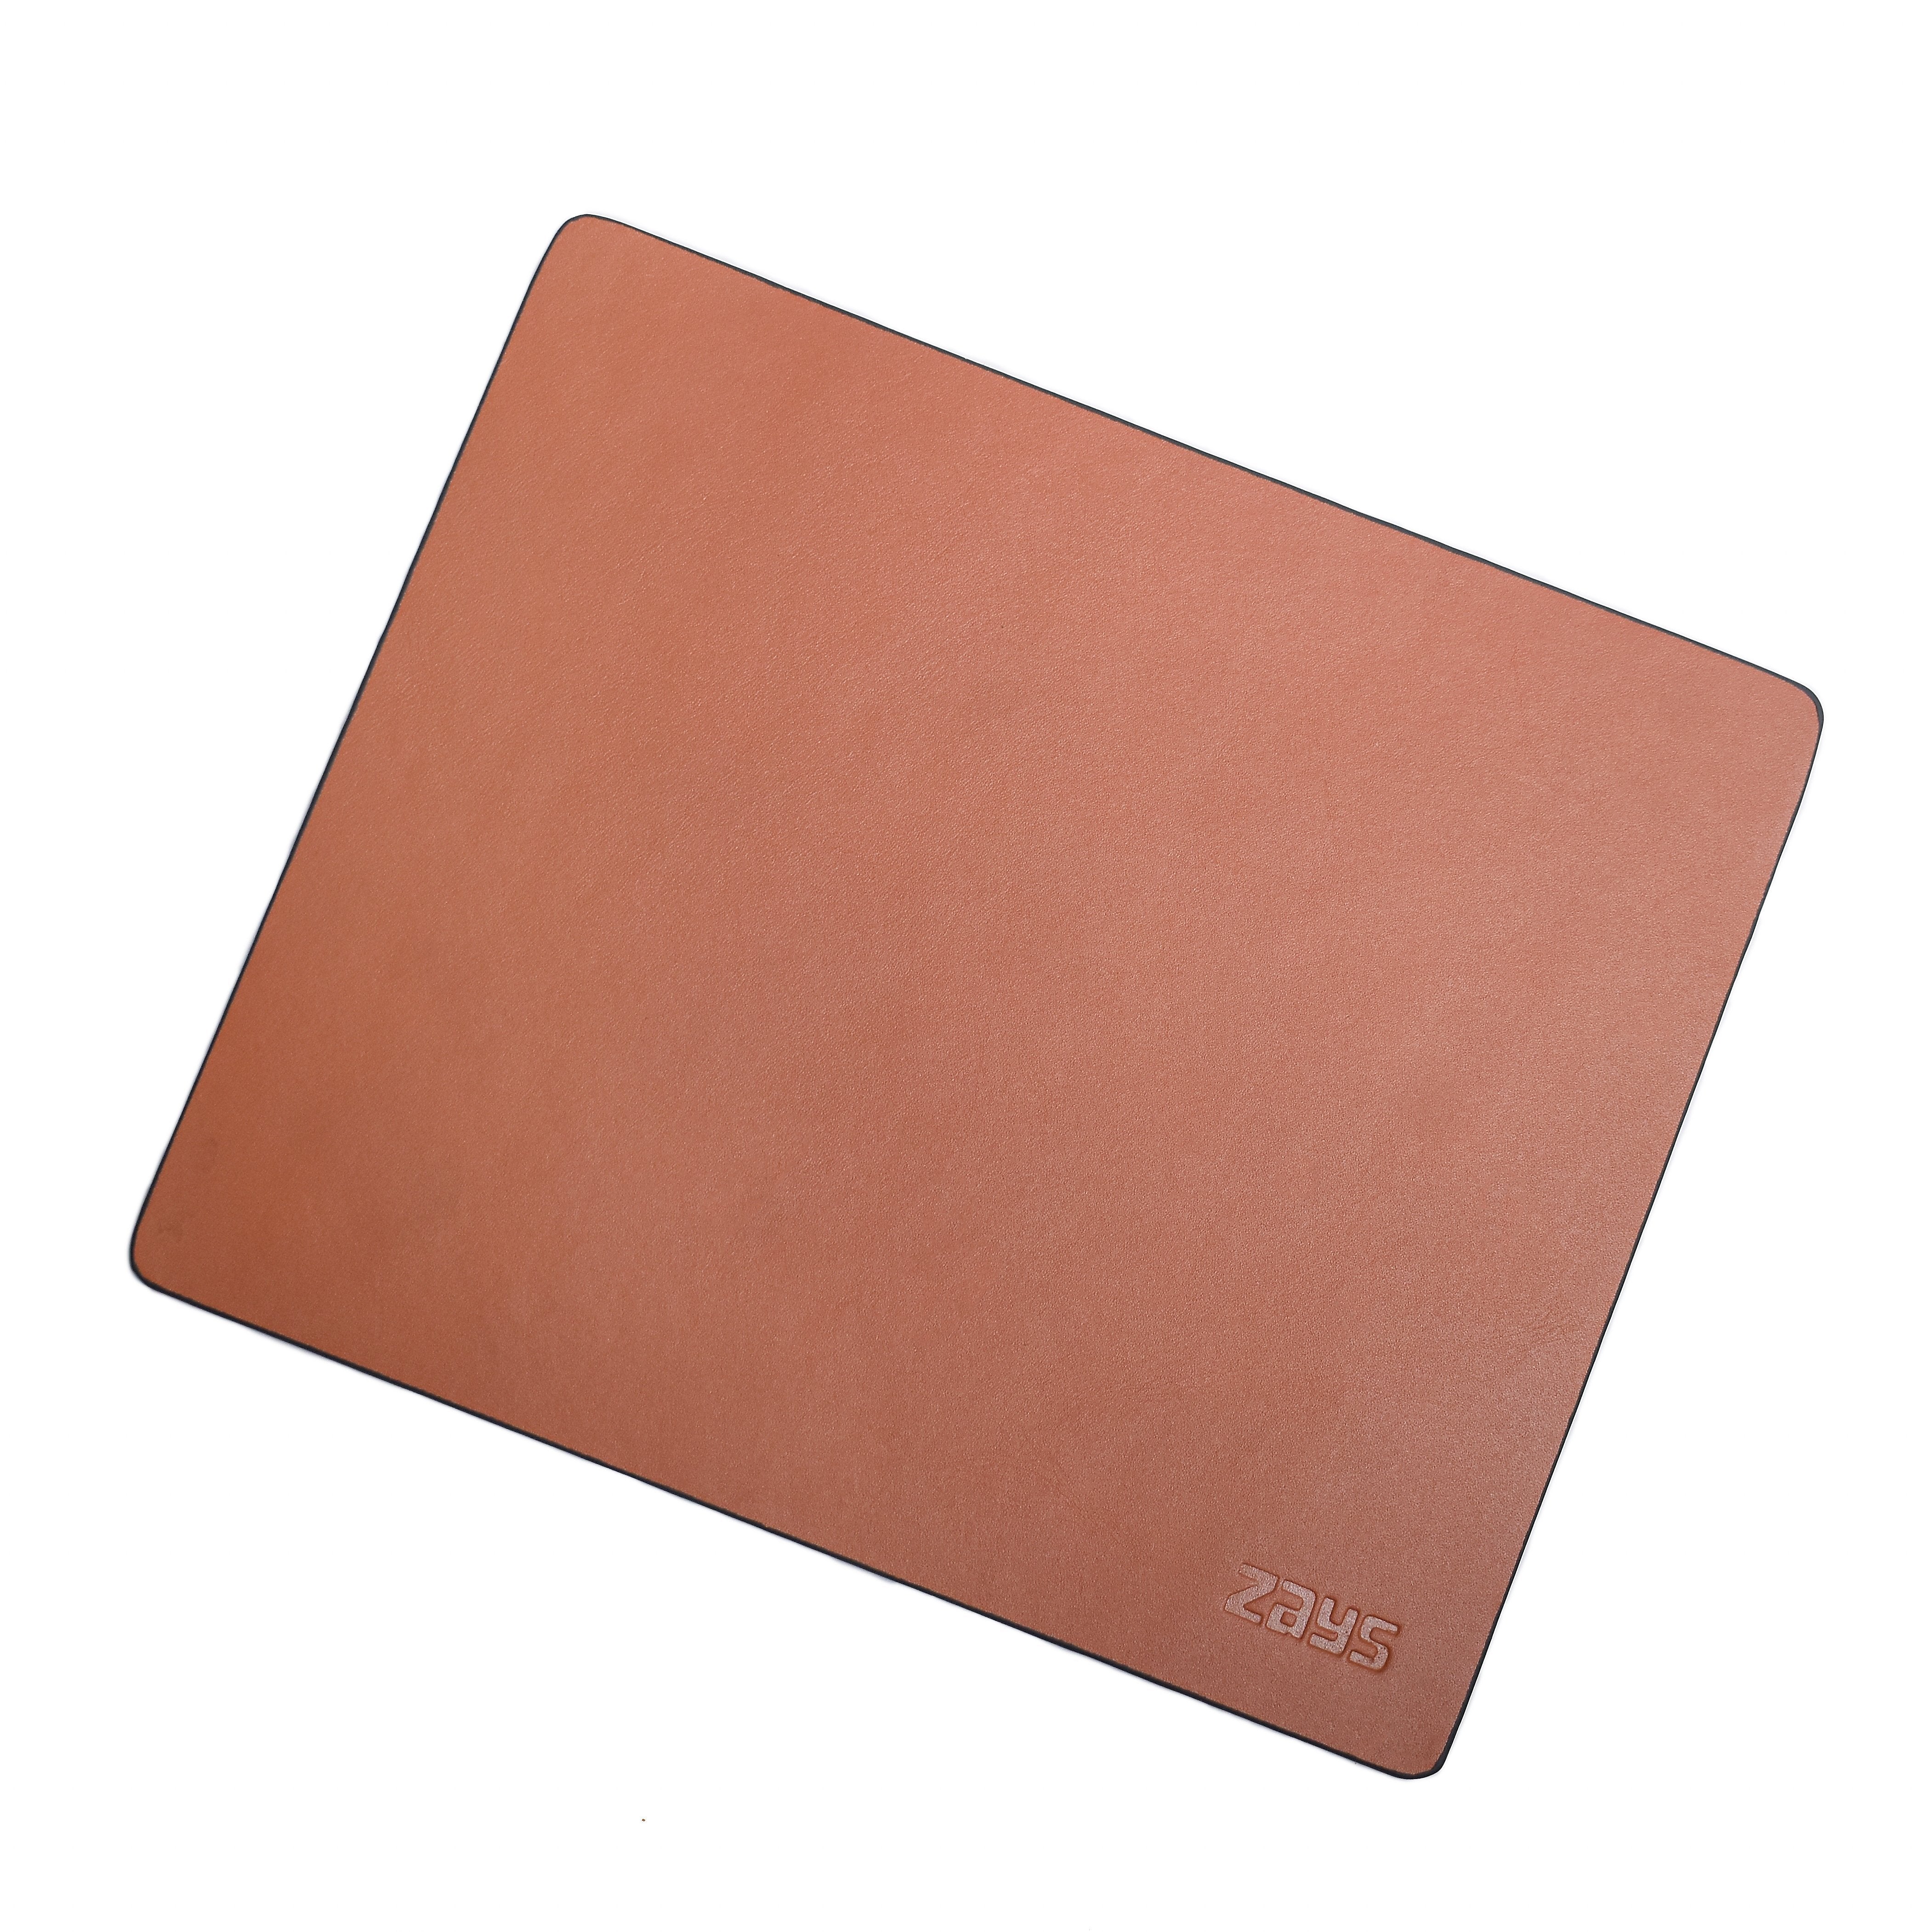 Zays Leather Mouse Pad (Brown) - ZAYSMP02